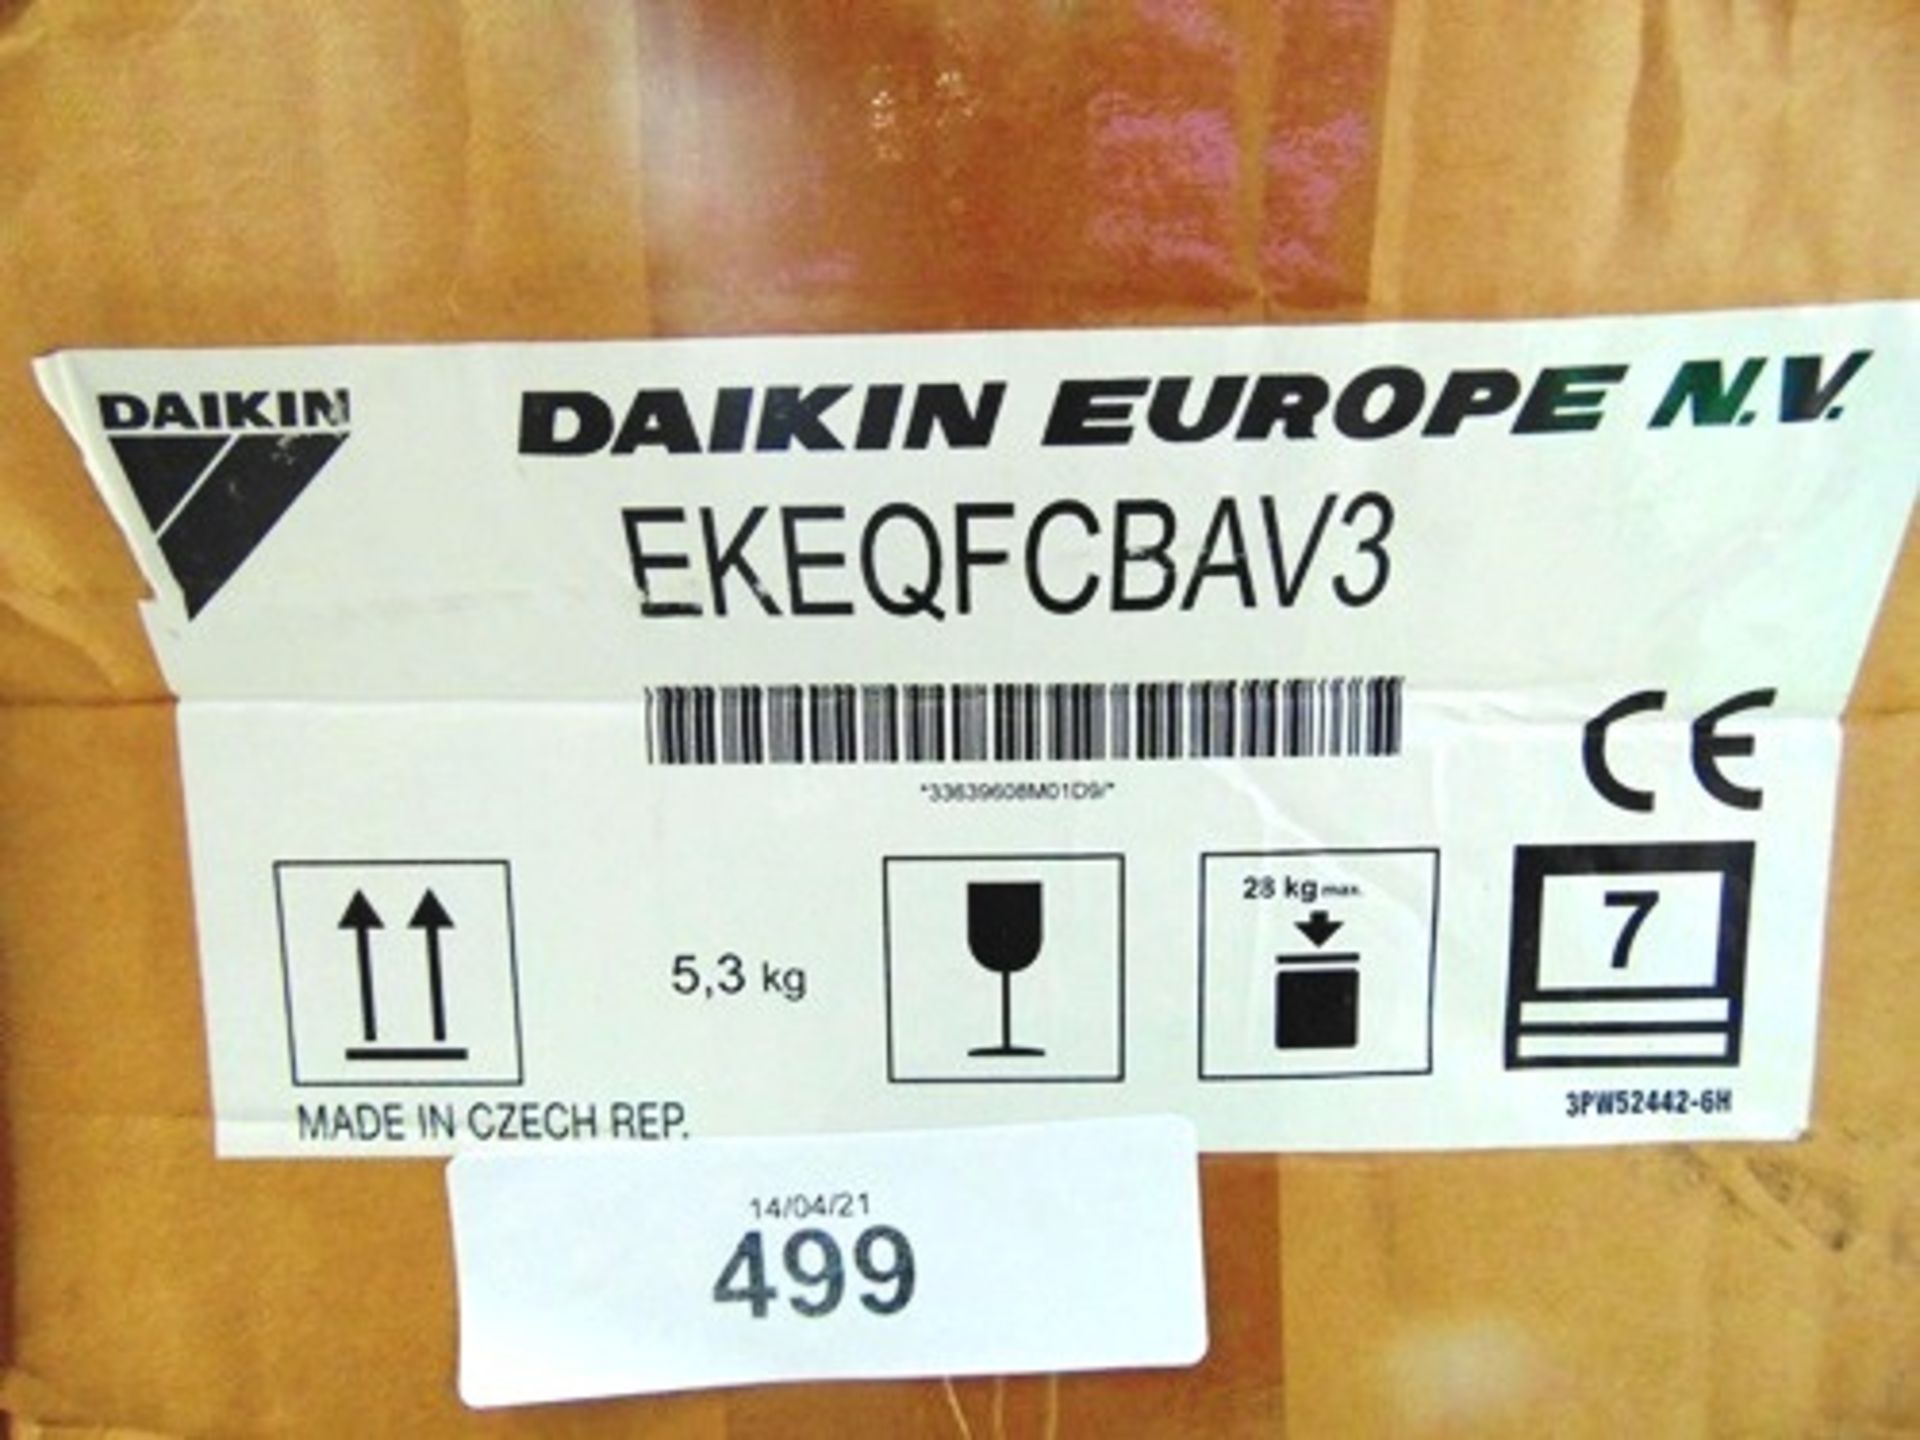 1 x Daikin kit for combination Daikin condensing units, P.N. EKEQFCBAV3, 230V - New in box, box